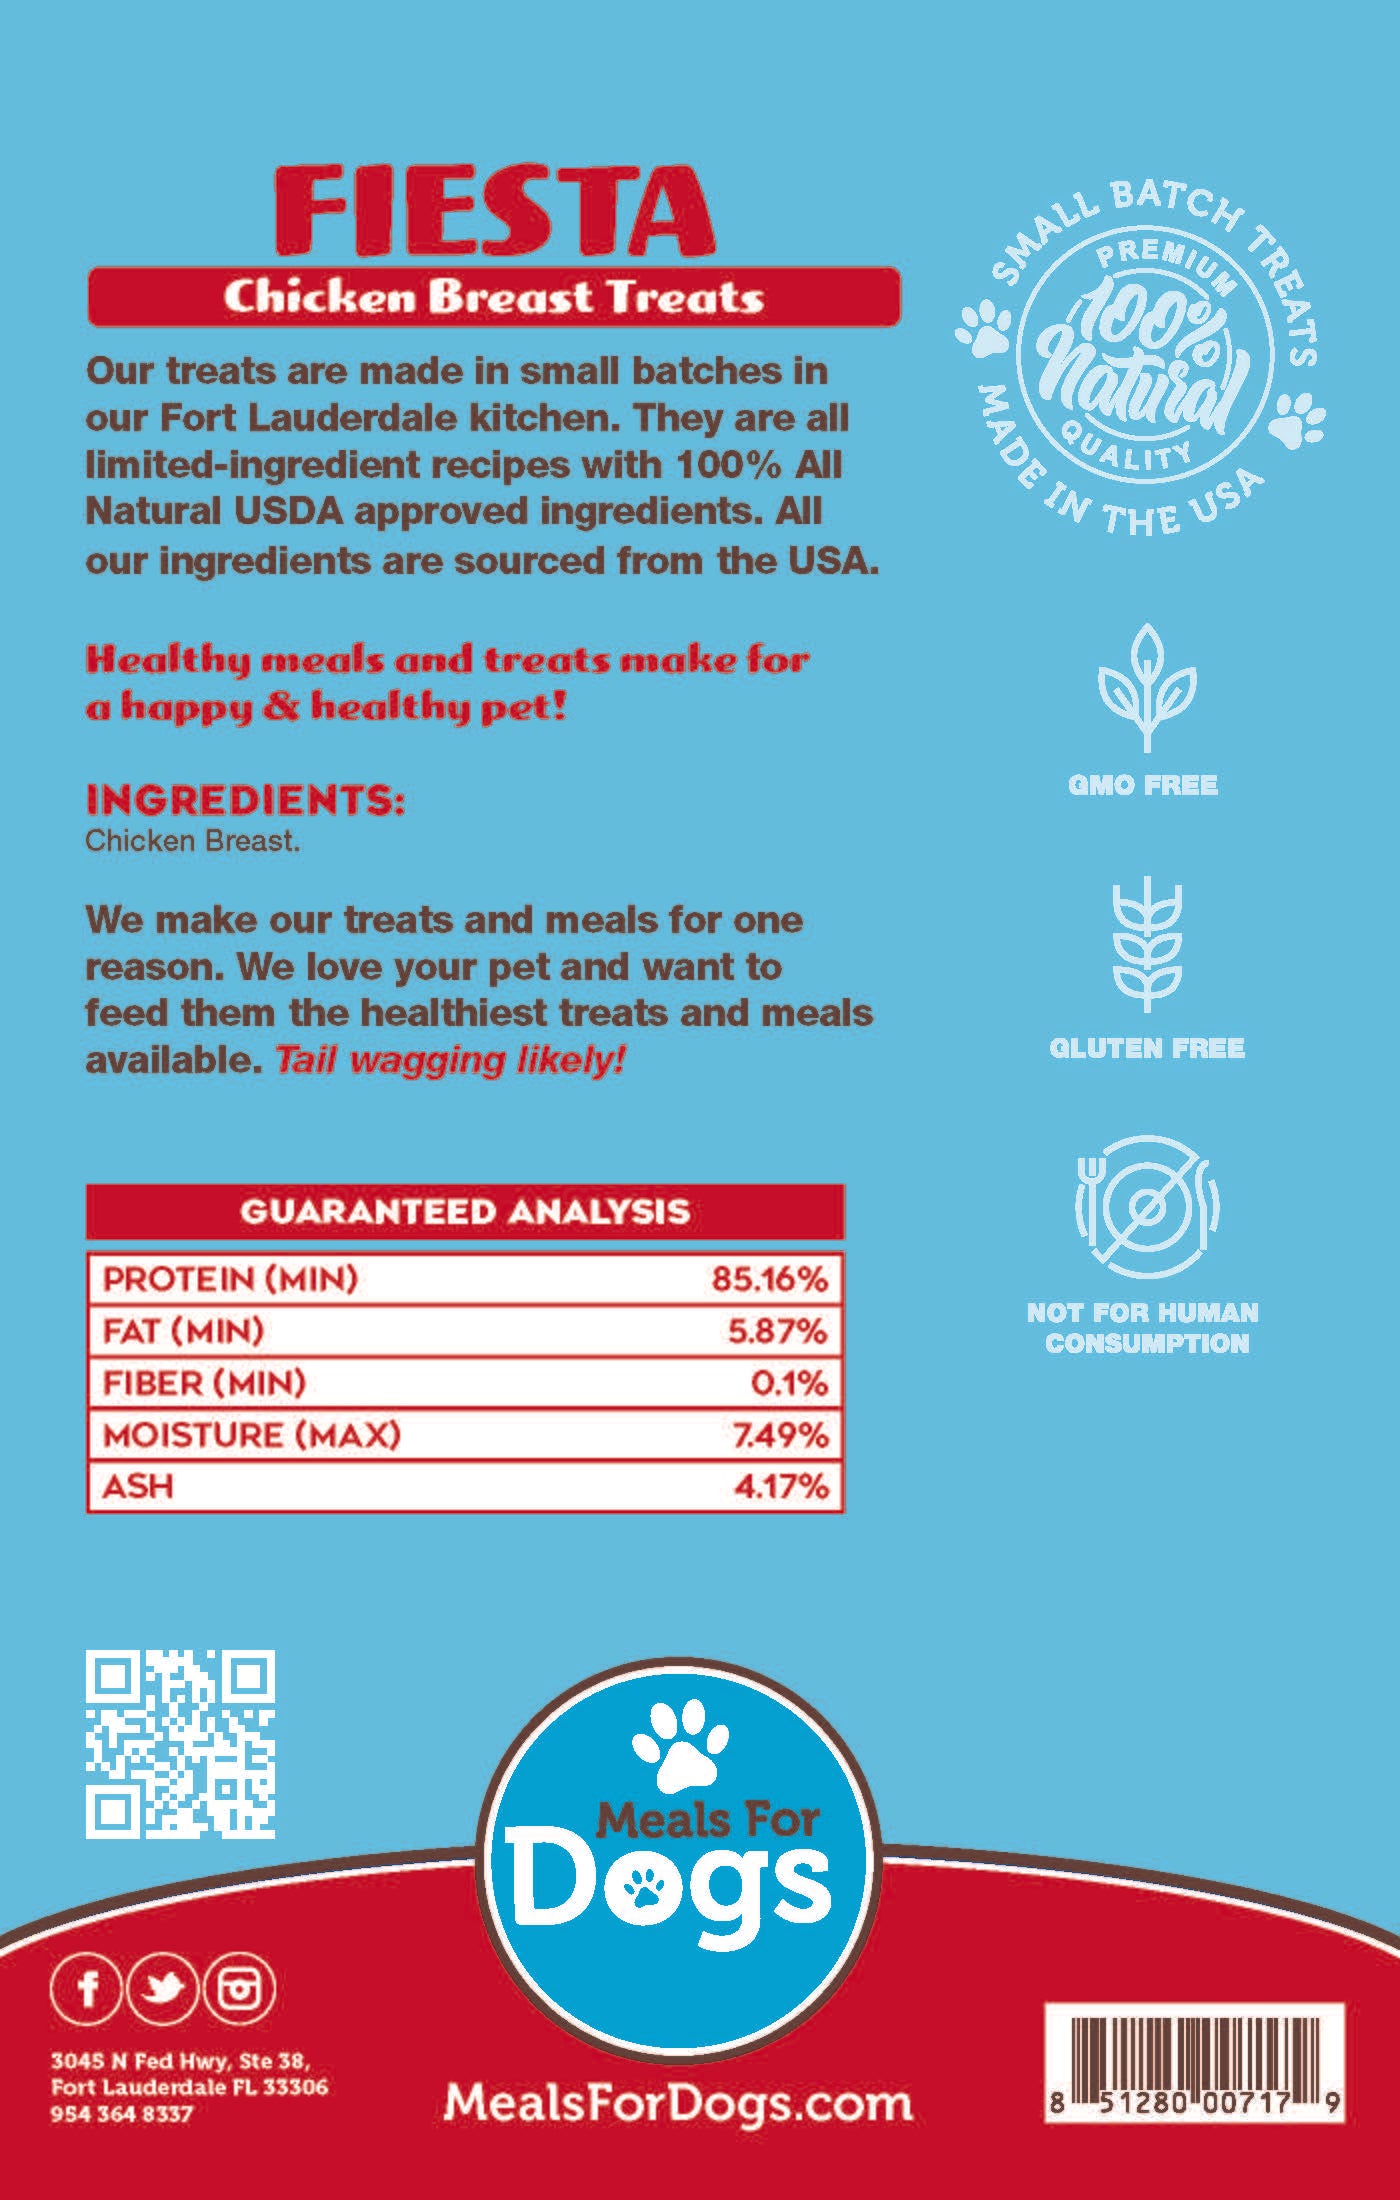 Fiesta Chicken Breast Treats | Meals for Dogs